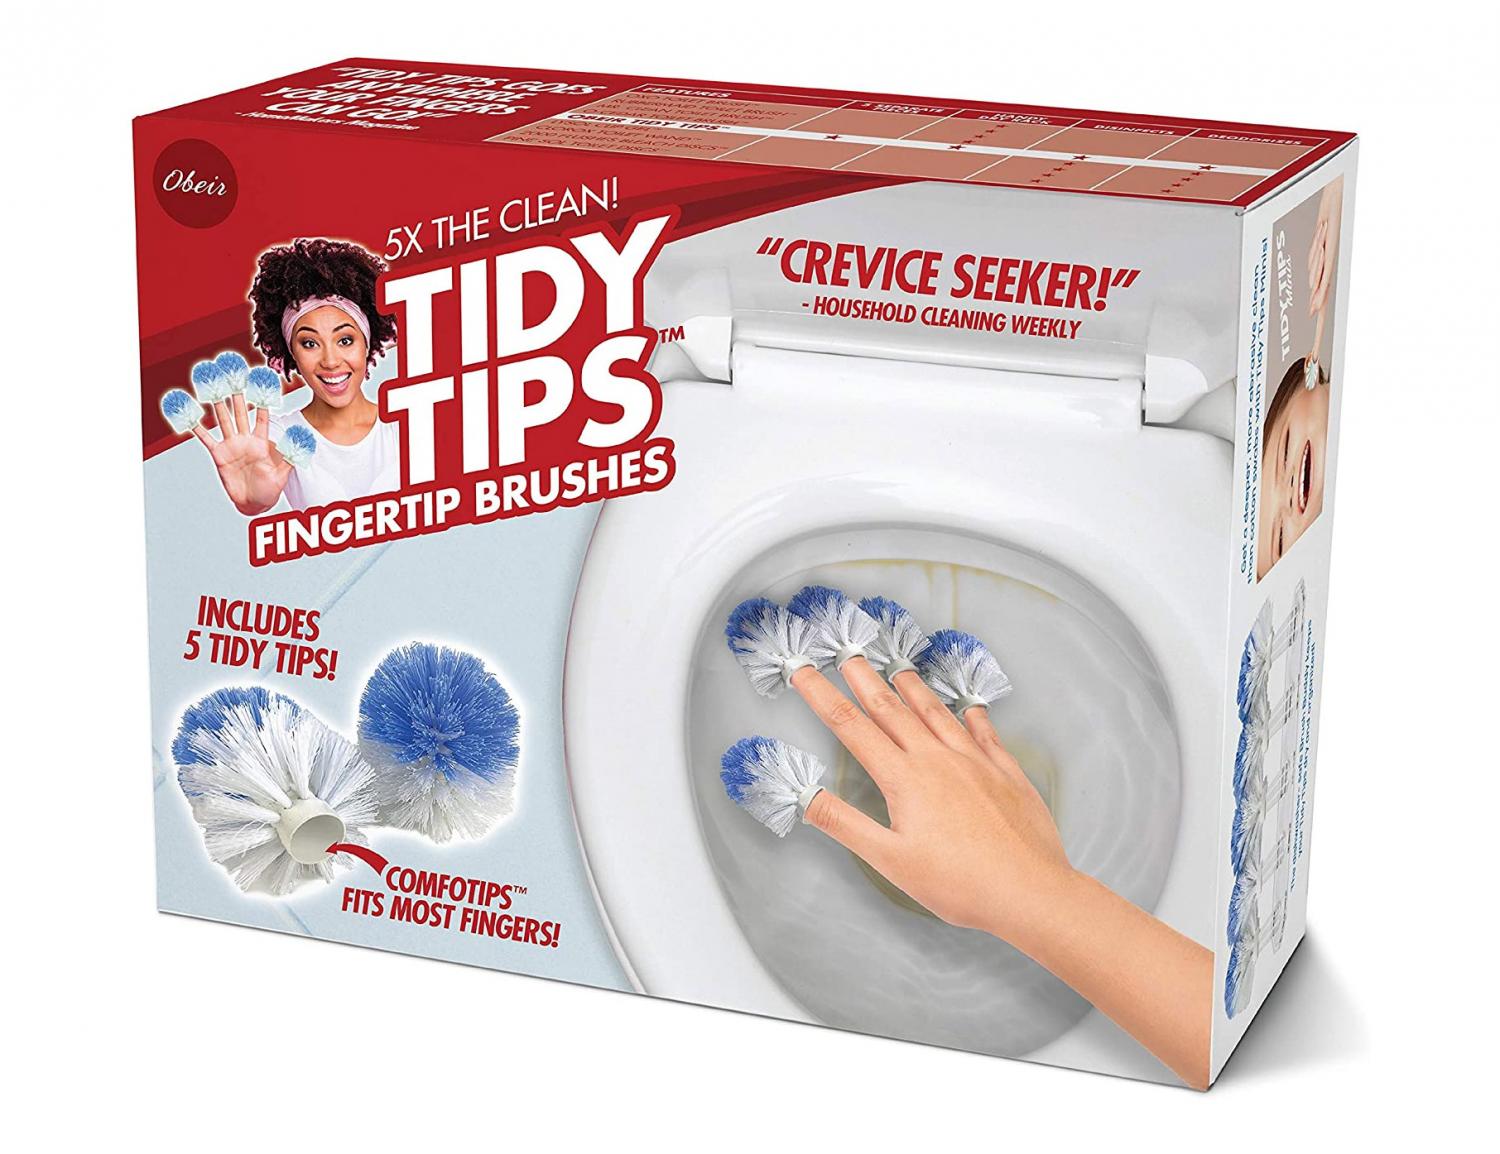 Tidy Tips Fingertip Toilet Brushes - Tiny toilet brushes for your fingers